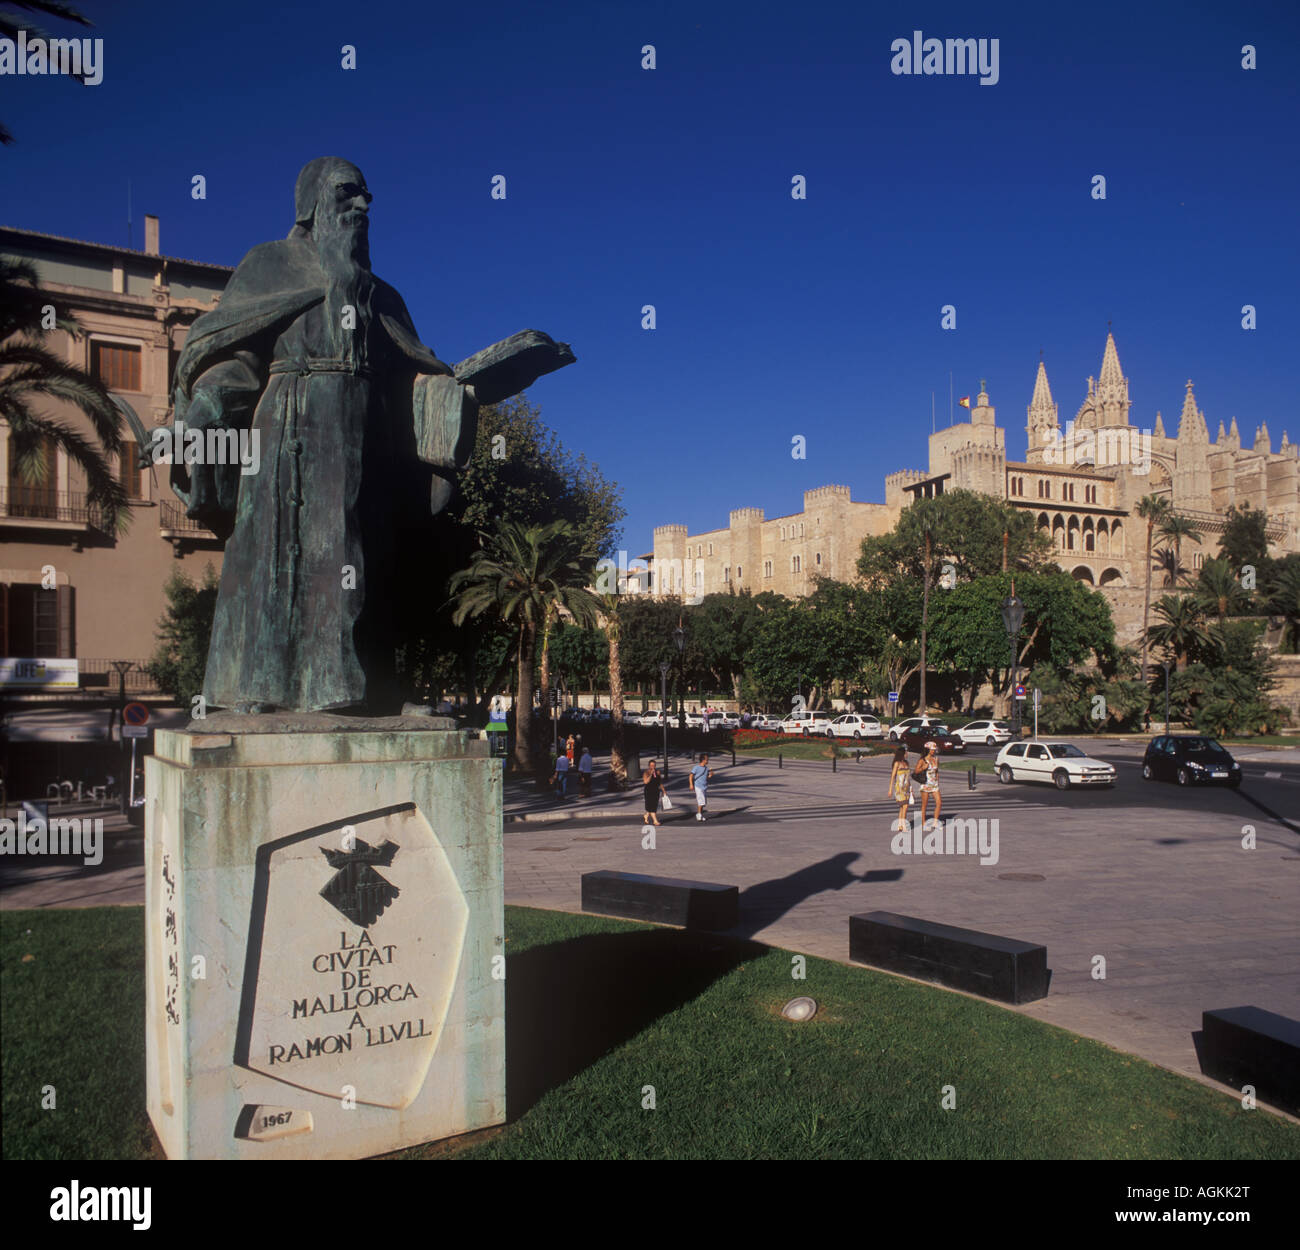 Monument to Ramon llull, Scholar, + Historic Gothic Cathedral, Palma de Mallorca, spain. Stock Photo